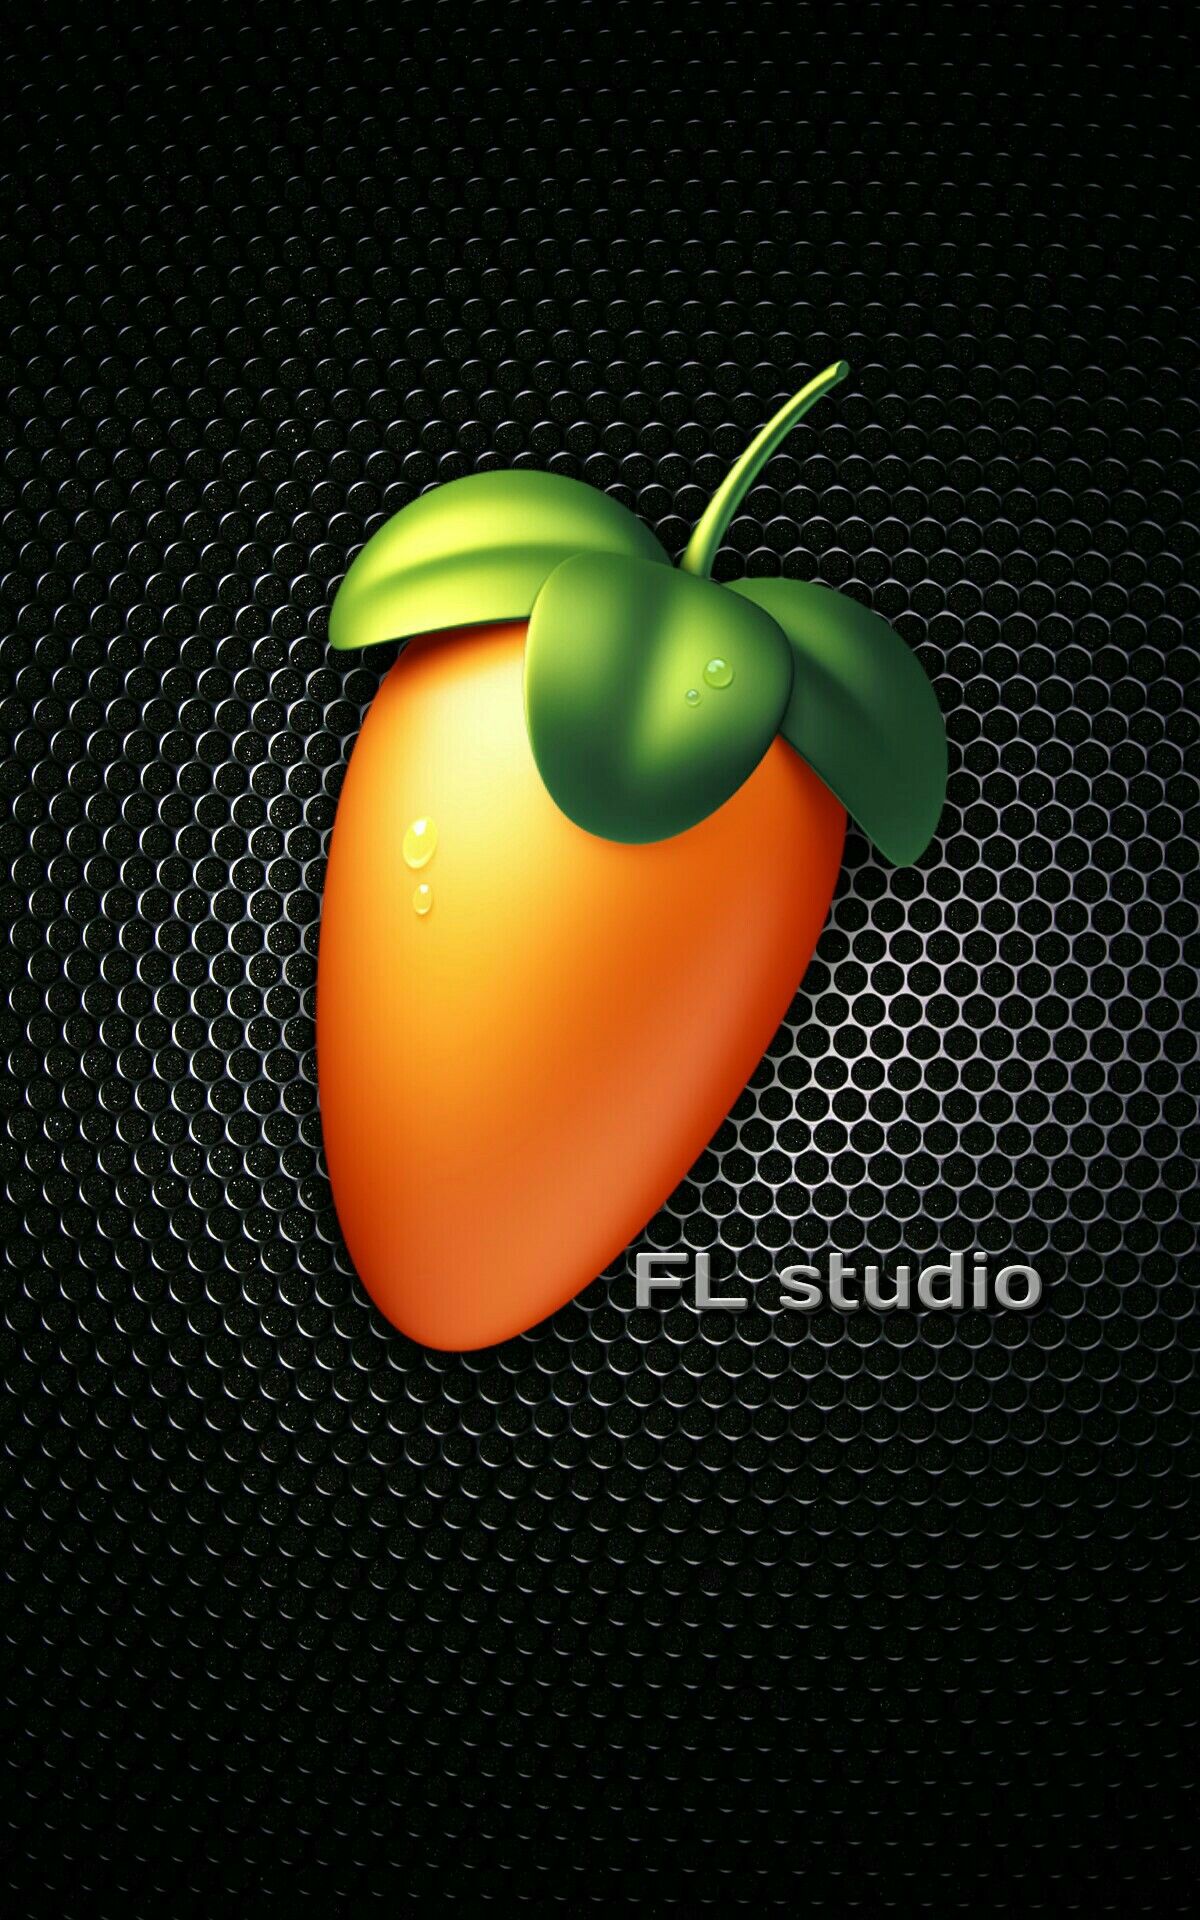 Fl Studio Wallpaper HD Mobile Art In